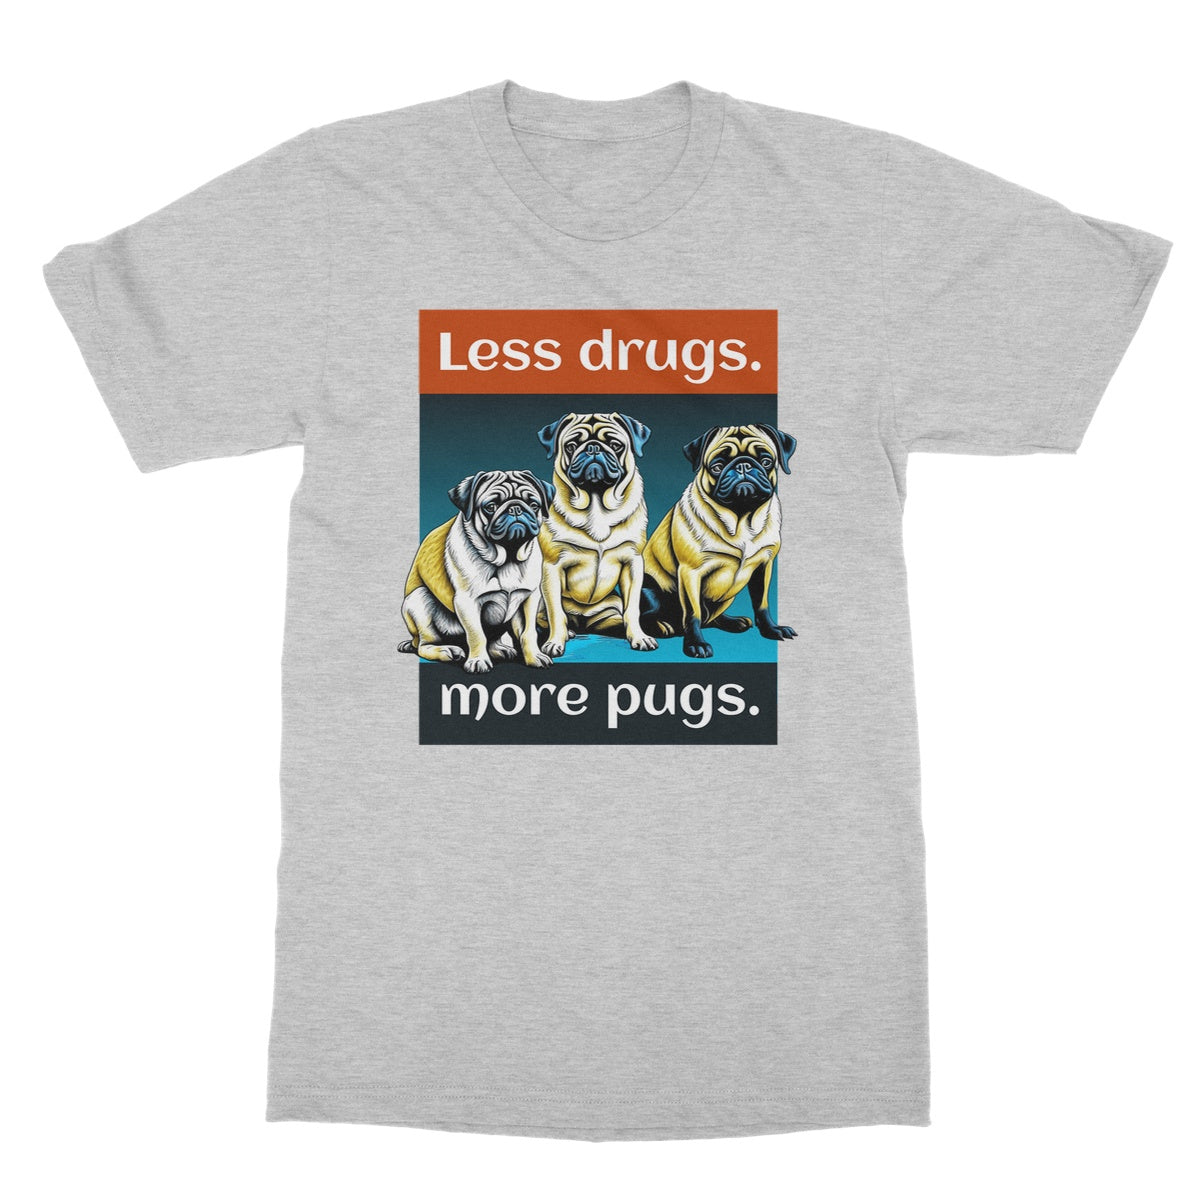 less drugs more pugs t shirt light grey